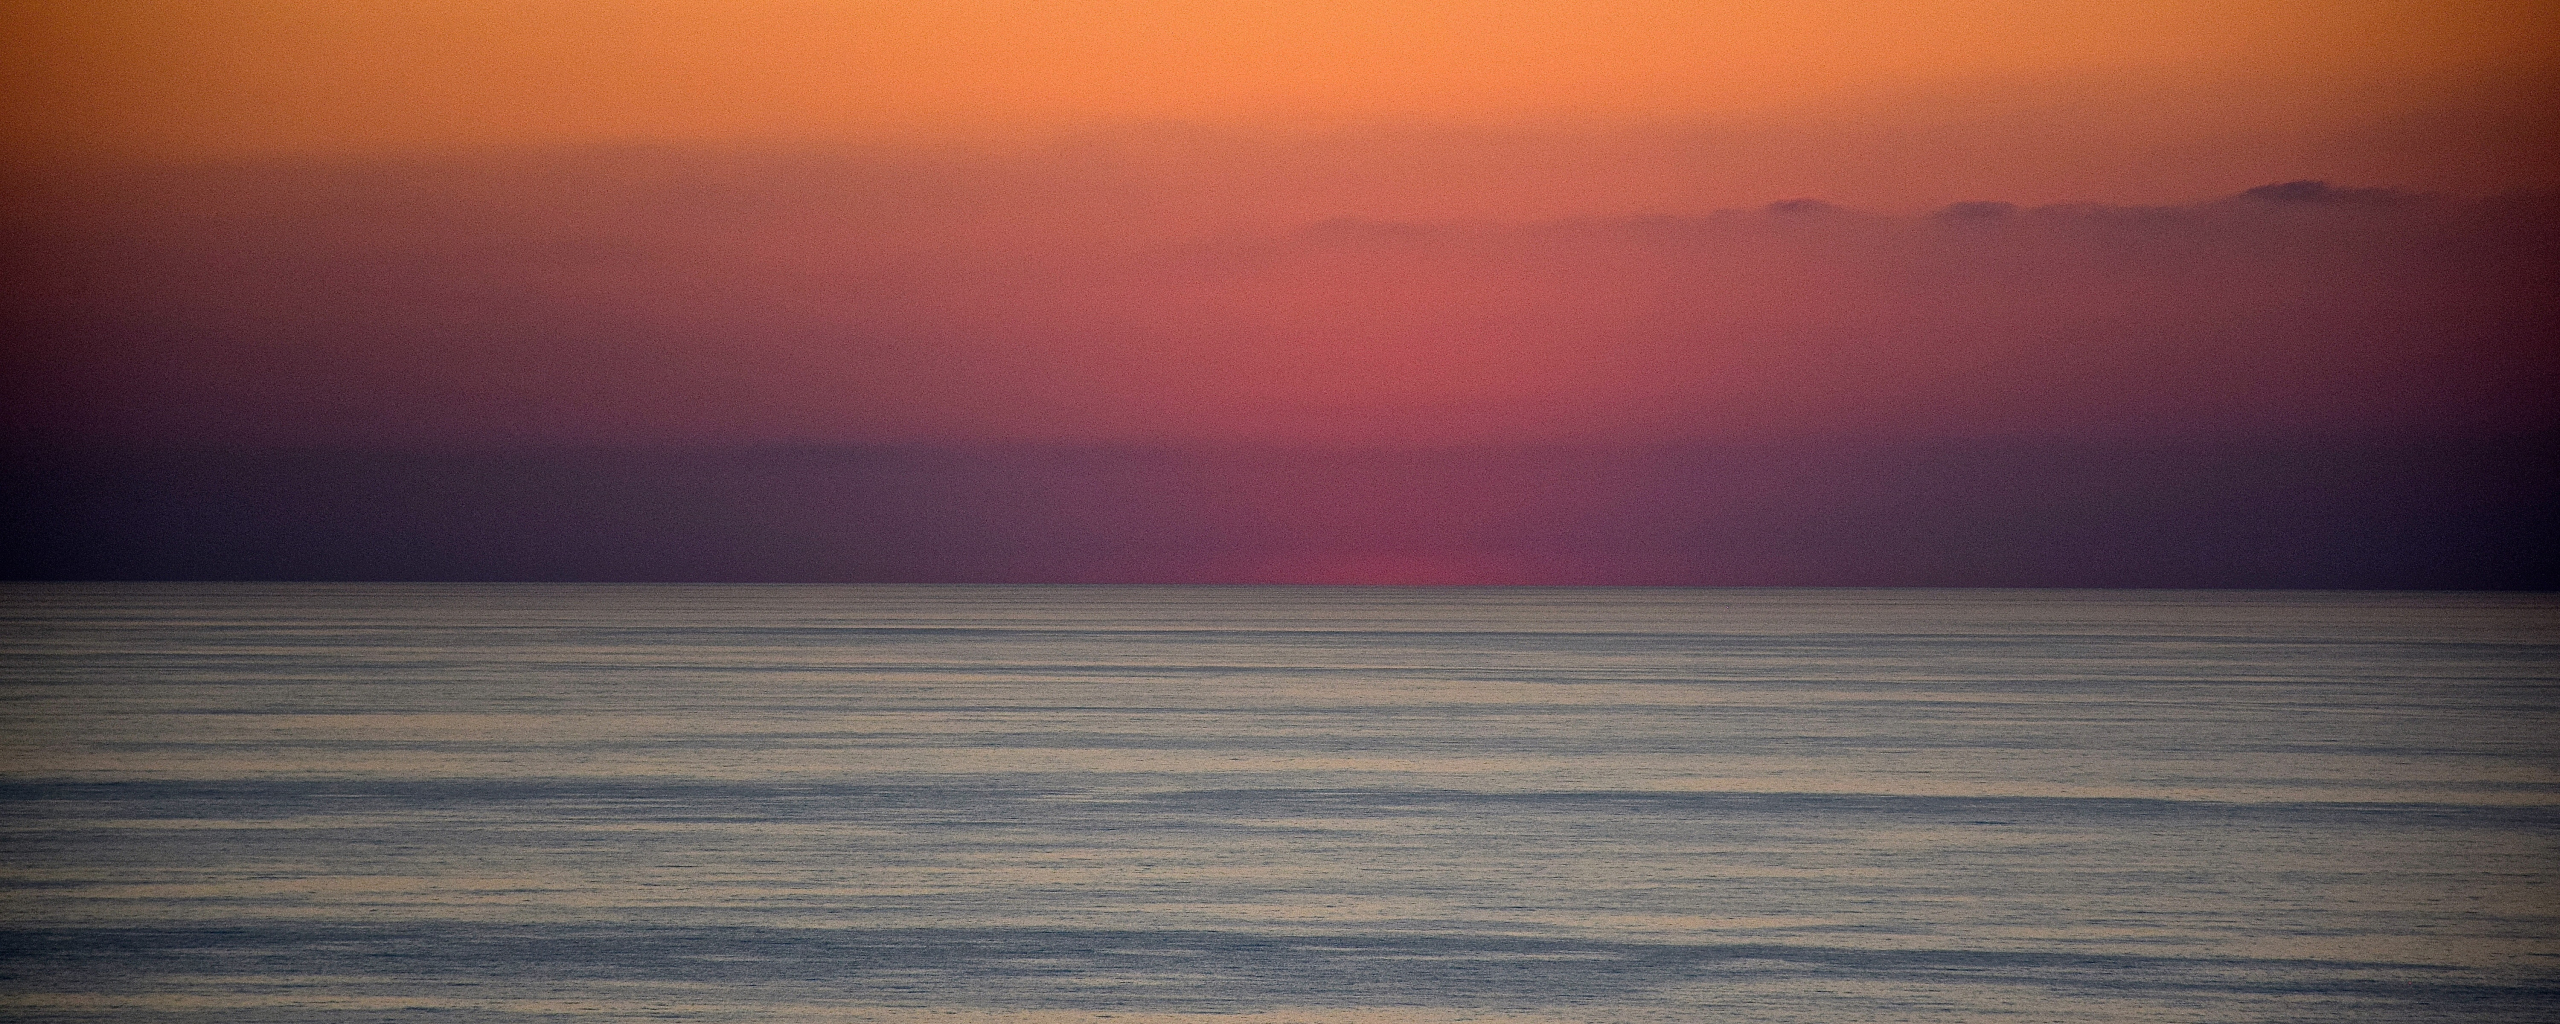 Sea, calm, sunset, body of water, blur, 2560x1024 wallpaper